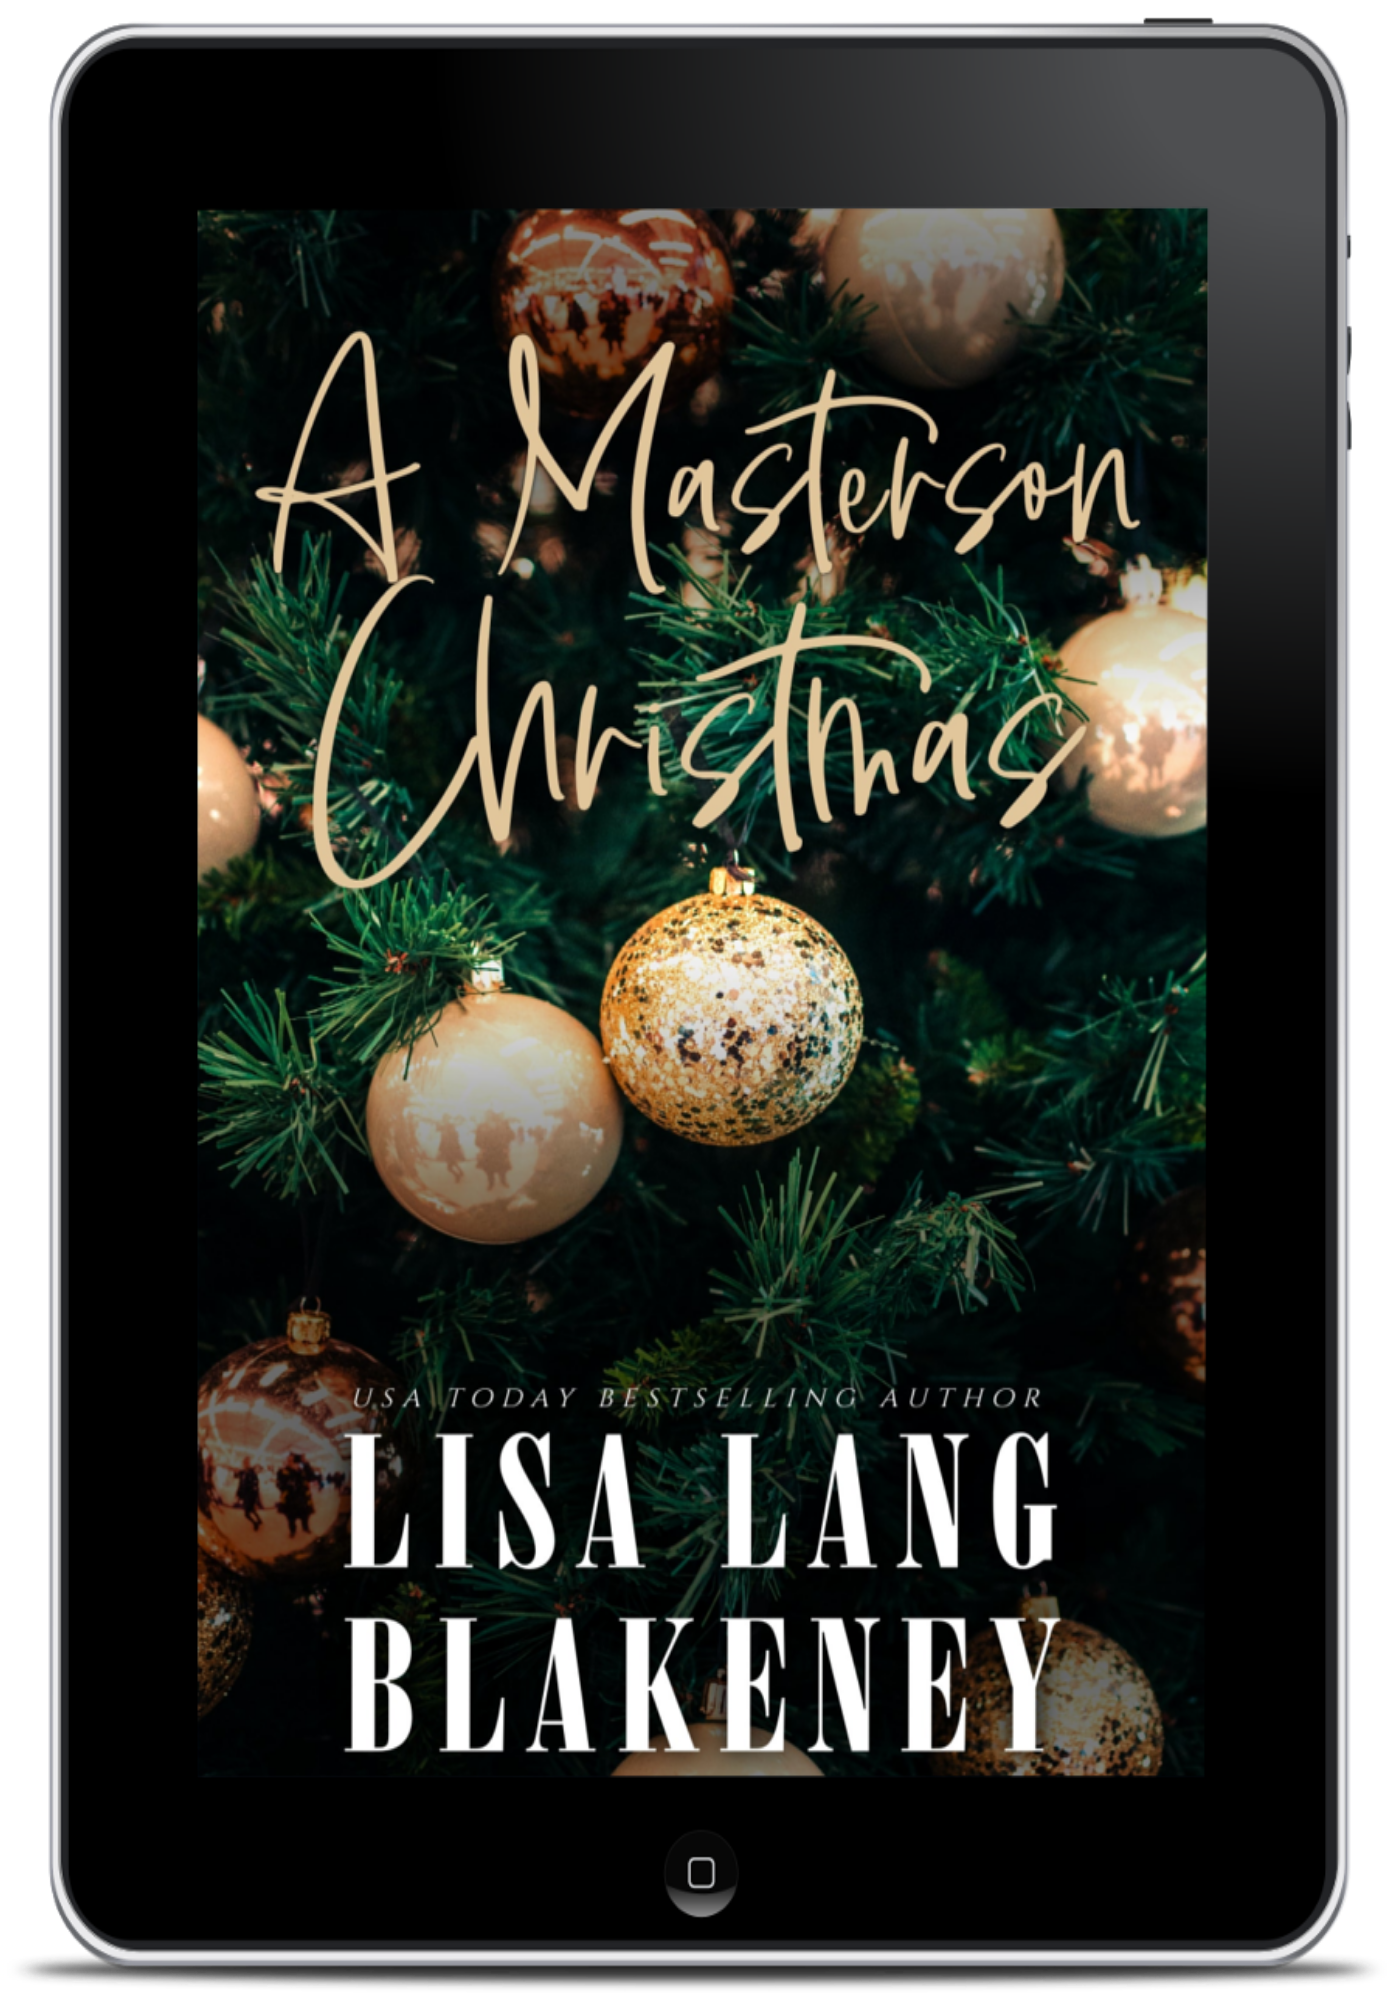 A Masterson Christmas (EBOOK)